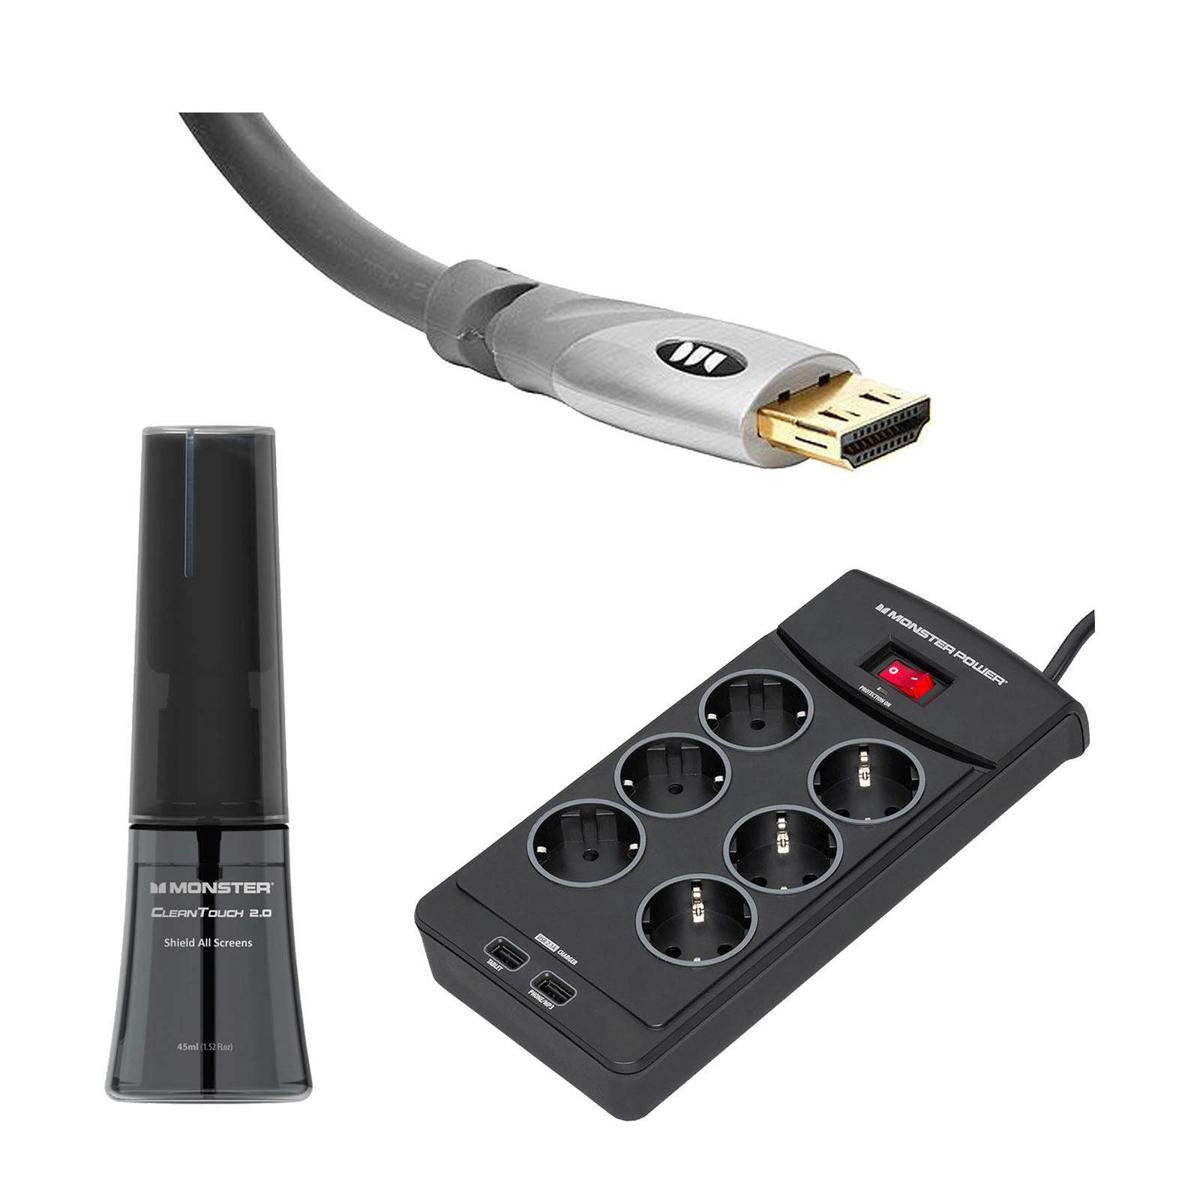 vervorming Gedeeltelijk selecteer Monster HDMI kabel + Stekkerdoos + Reinigingsmiddel bundel | wehkamp